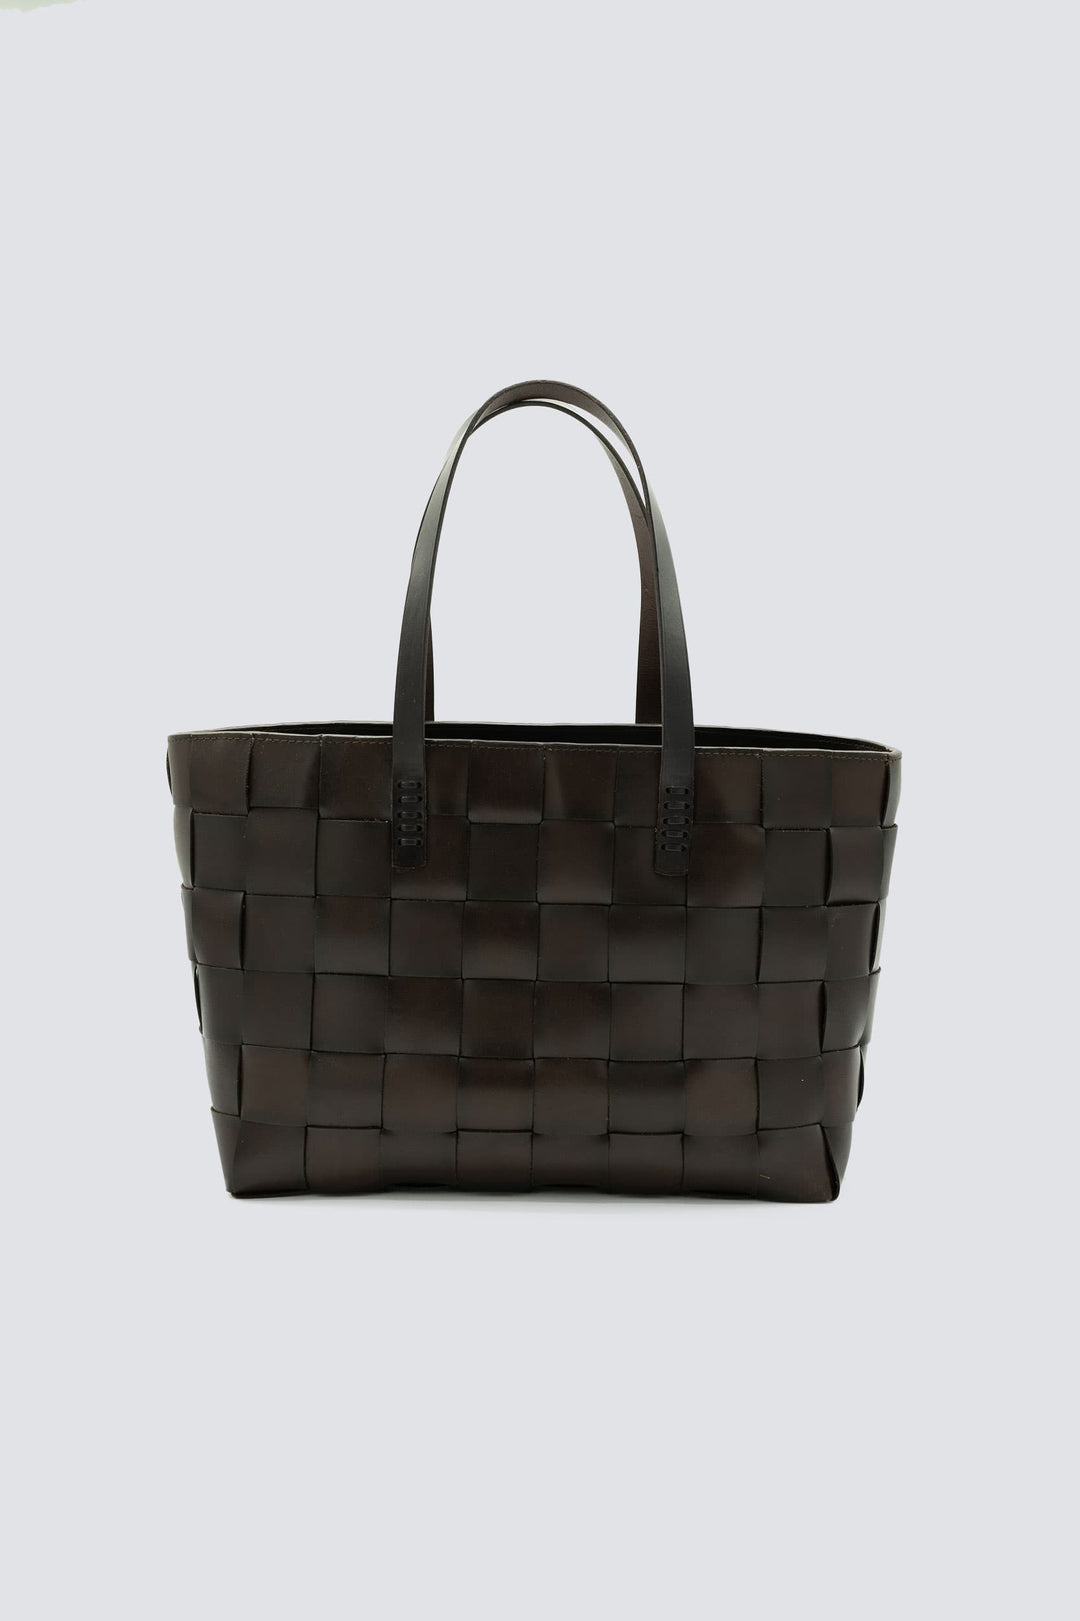 Dragon Diffusion woven leather bag handmade - Japan Tote Dark Brown